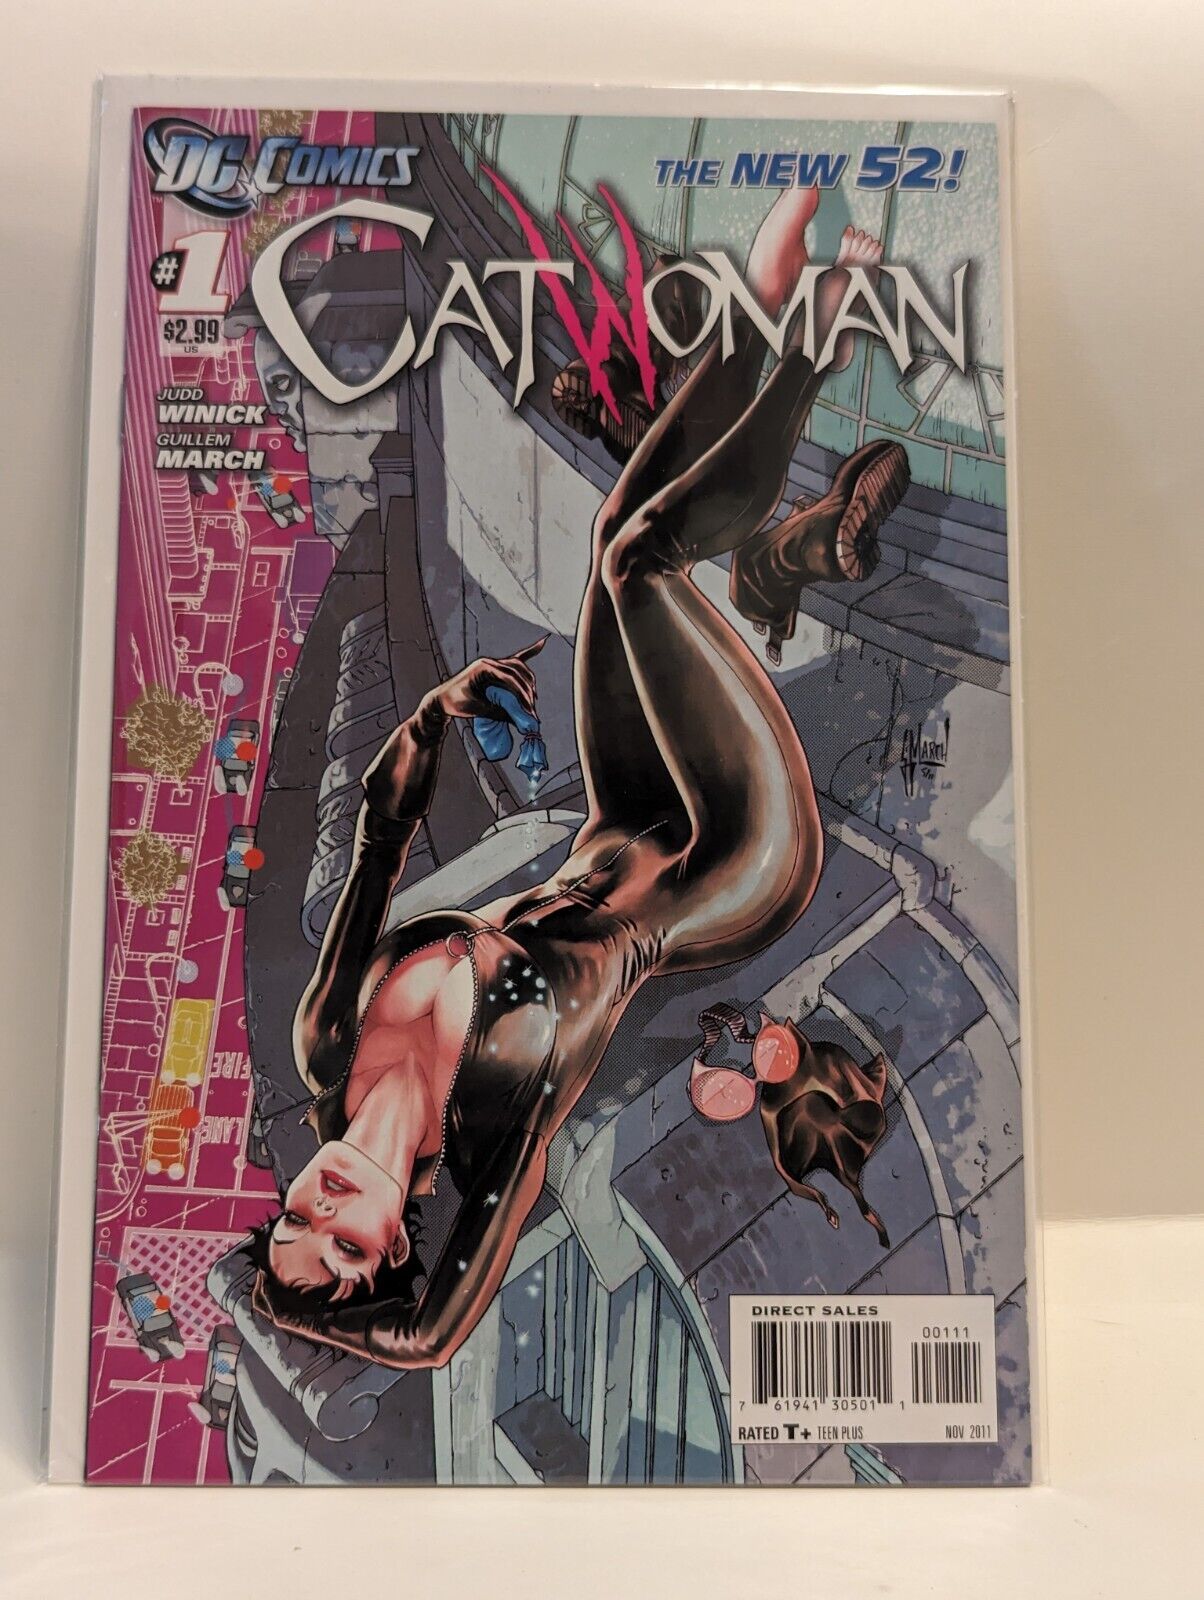 Catwoman #1 New 52 DC Comics